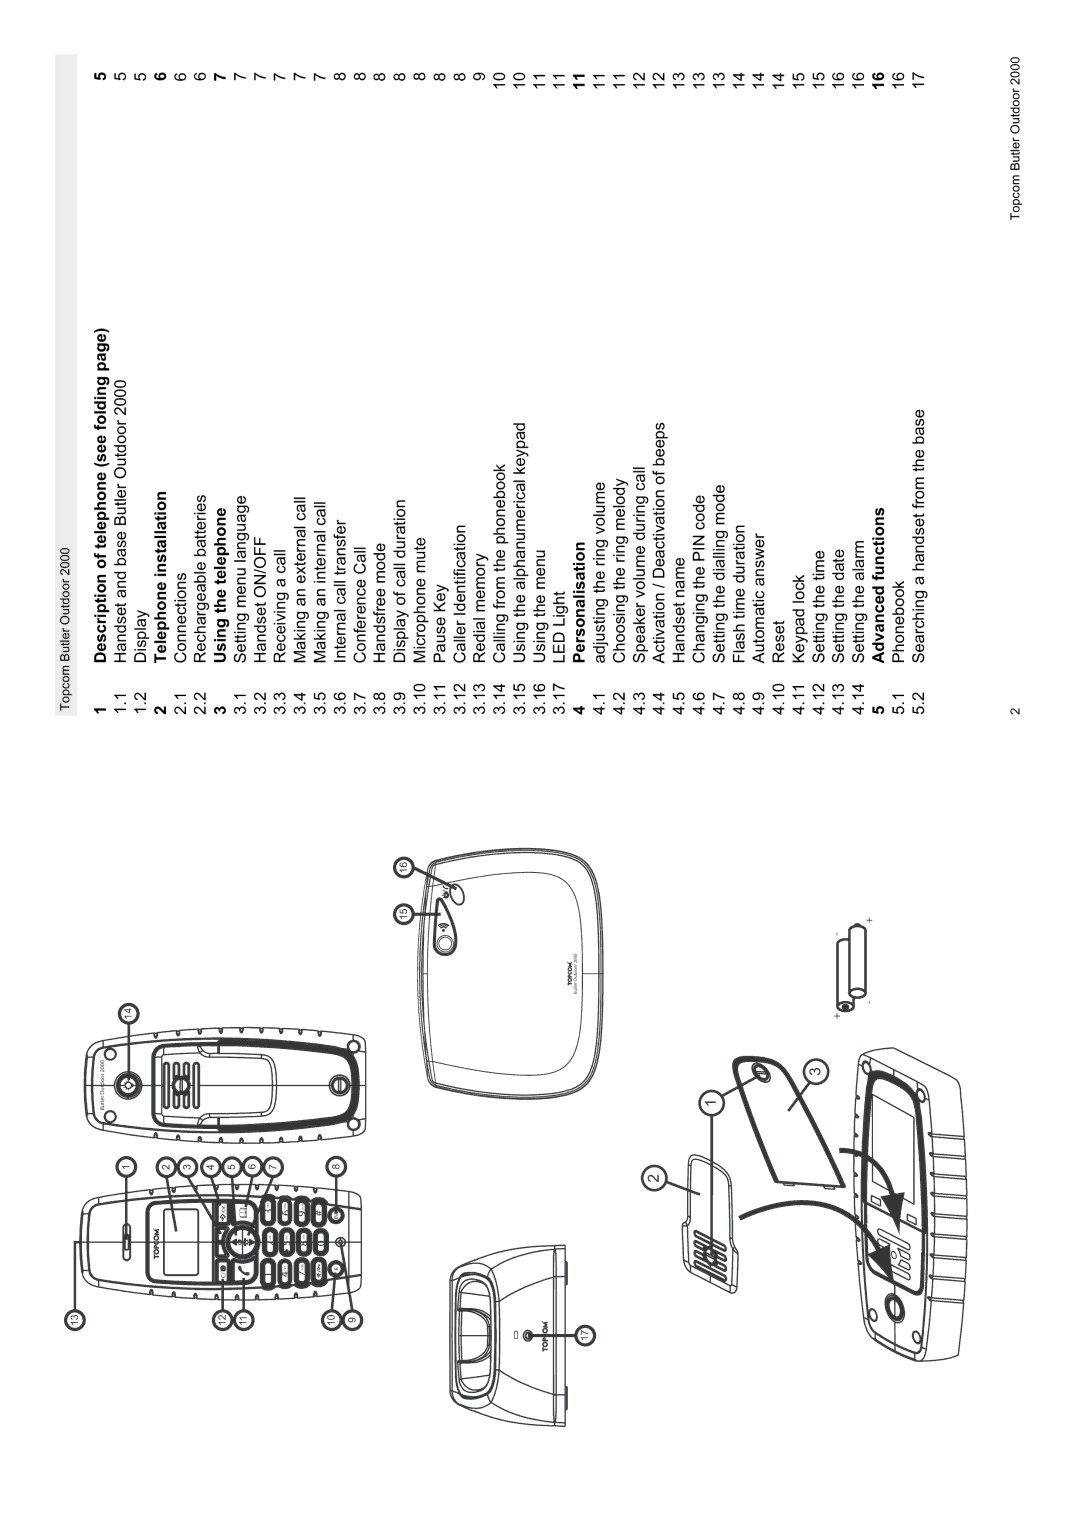 Topcom 2000 manual Description of telephone see folding 